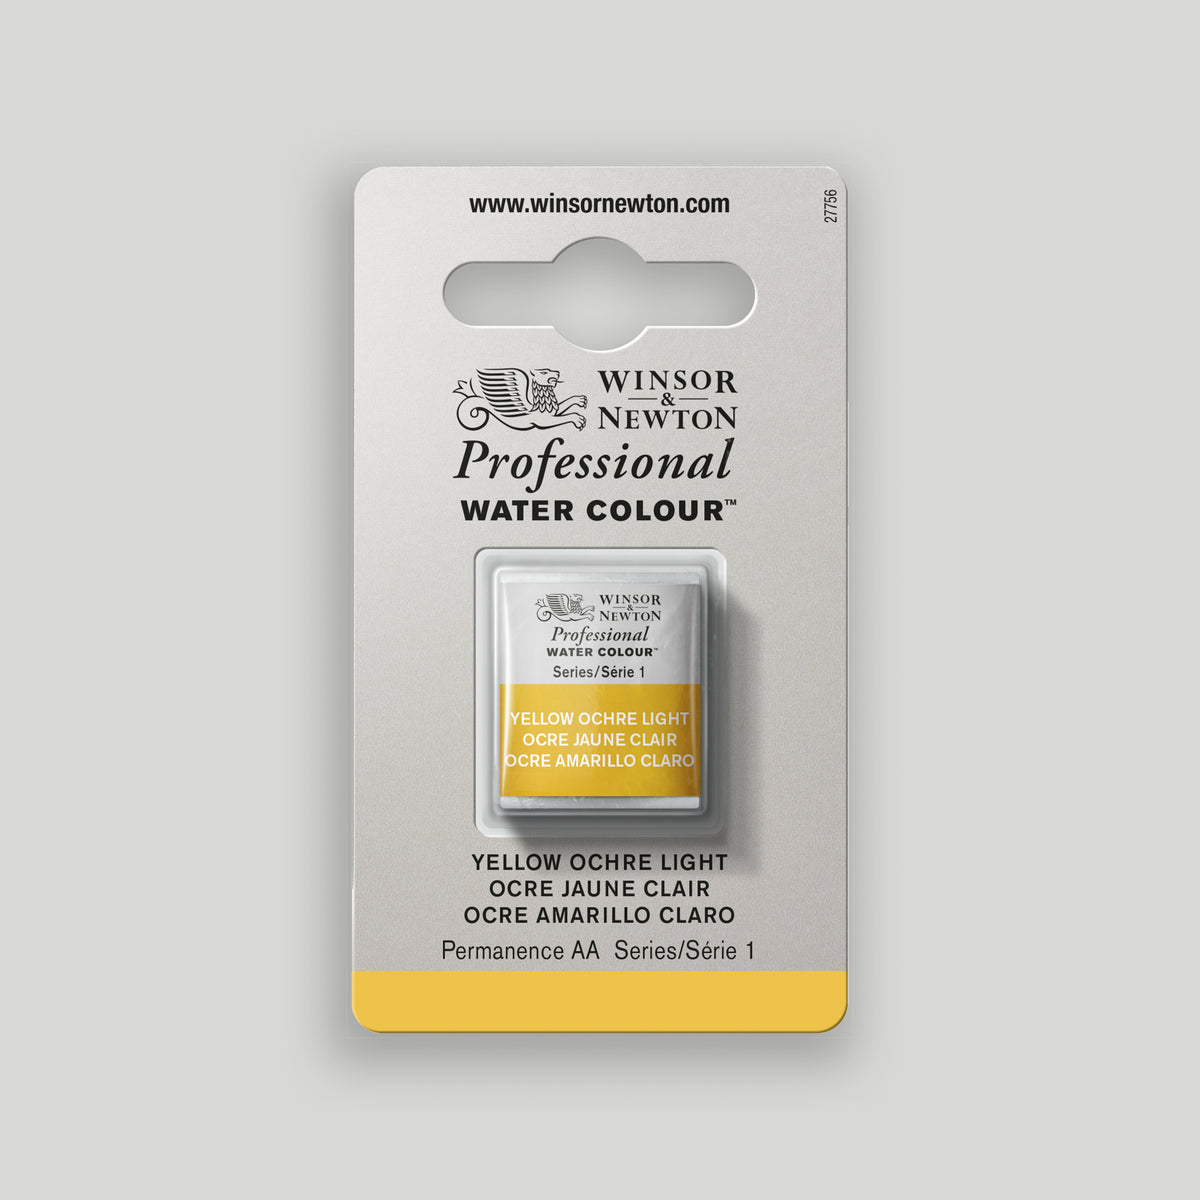 Winsor & Newton Professional Water Colour half pan Yellow Ochre Light 1